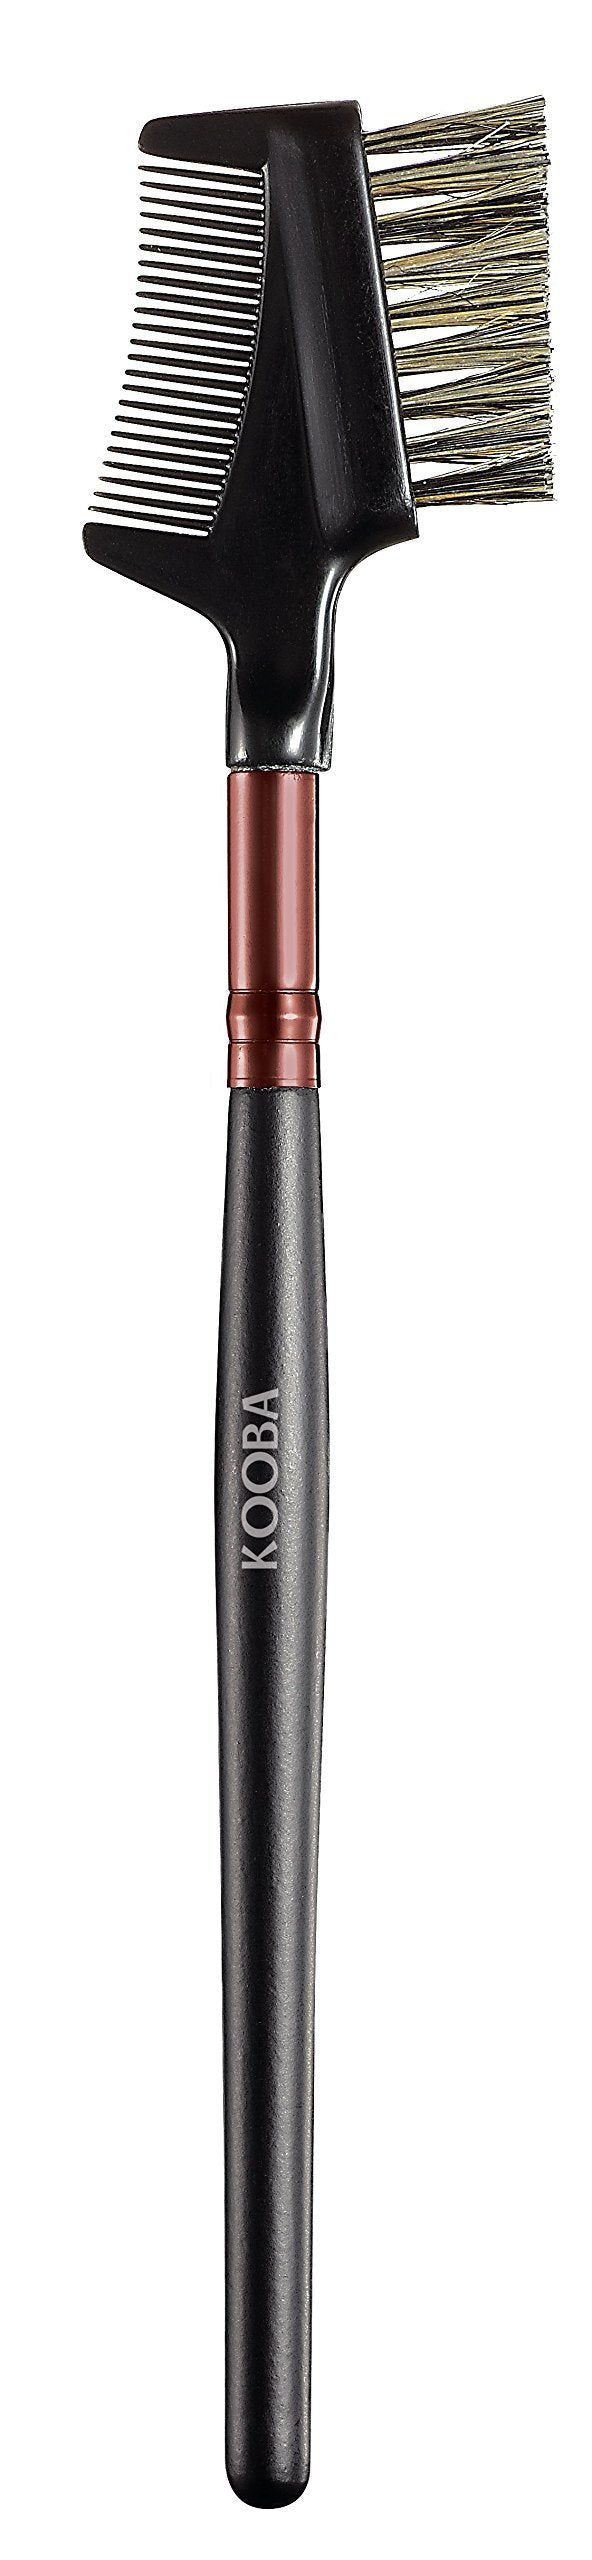 [Australia] - KOOBA Makeup Eyebrow Brush & Eyelash Comb - Portable Eye Powder Foundation Brush, Beauty Cosmetic Tool for Professional and Travel 